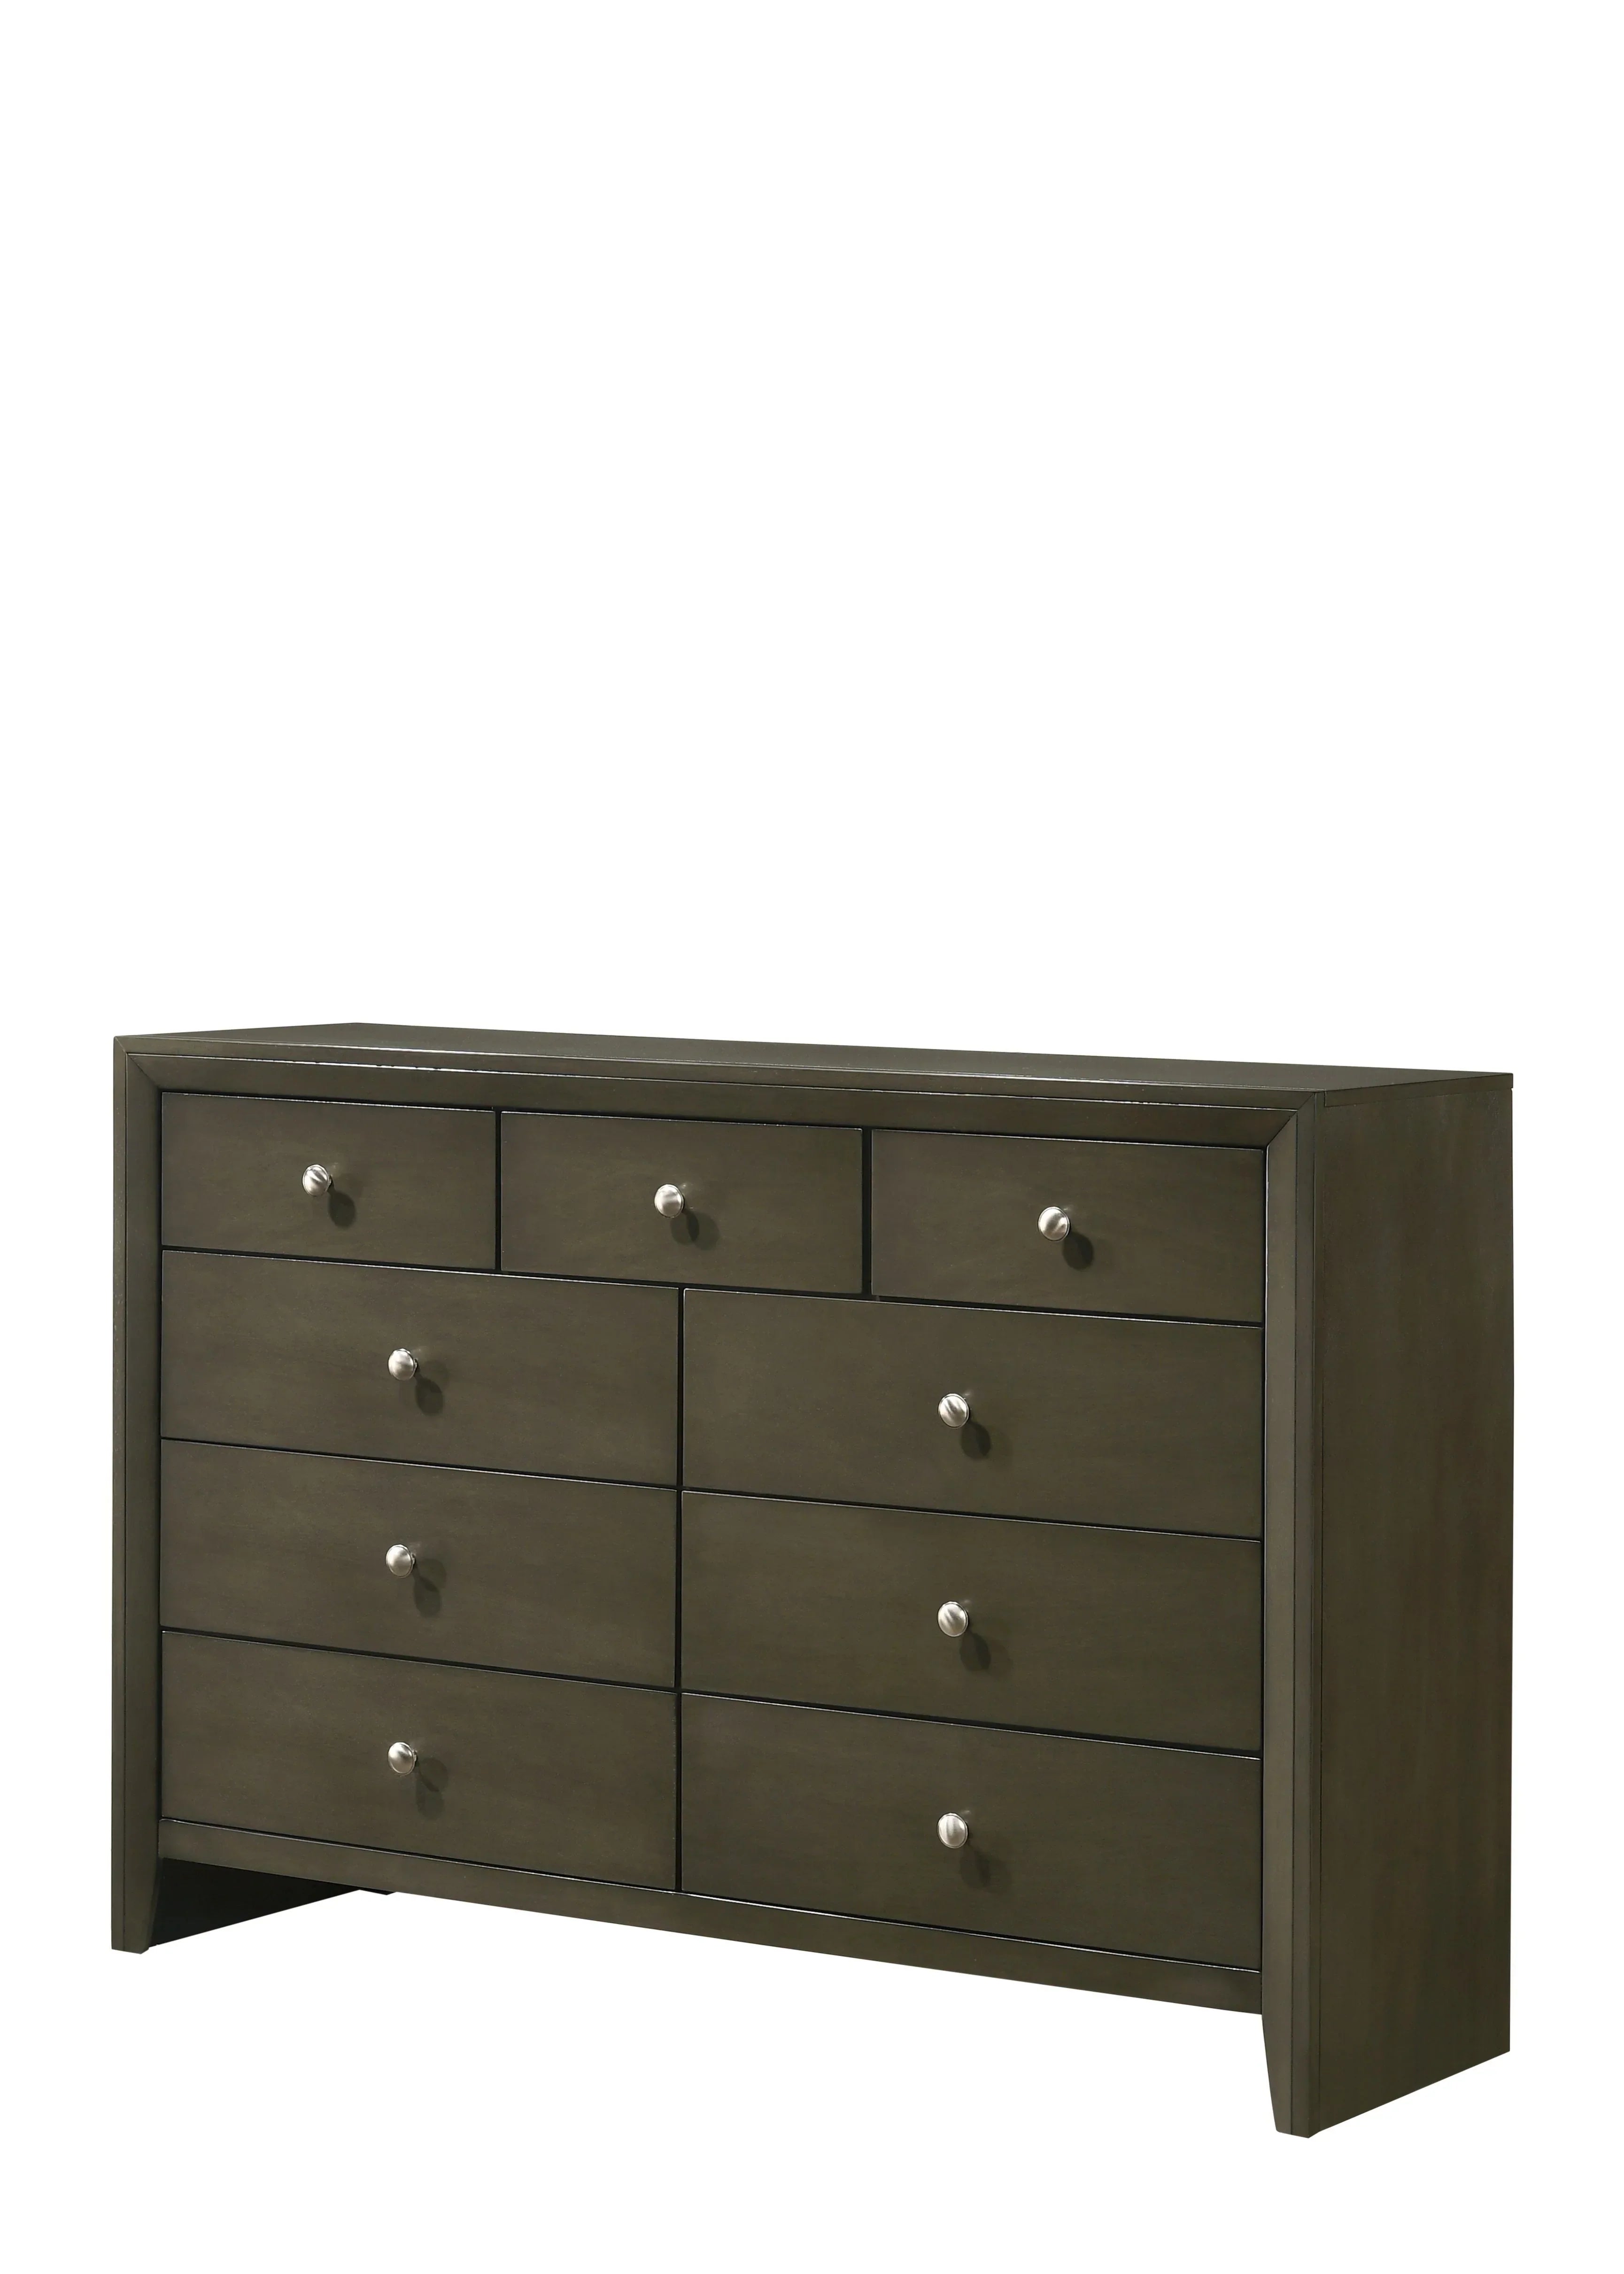 Ilana Gray Finish Dresser Model 28475 By ACME Furniture